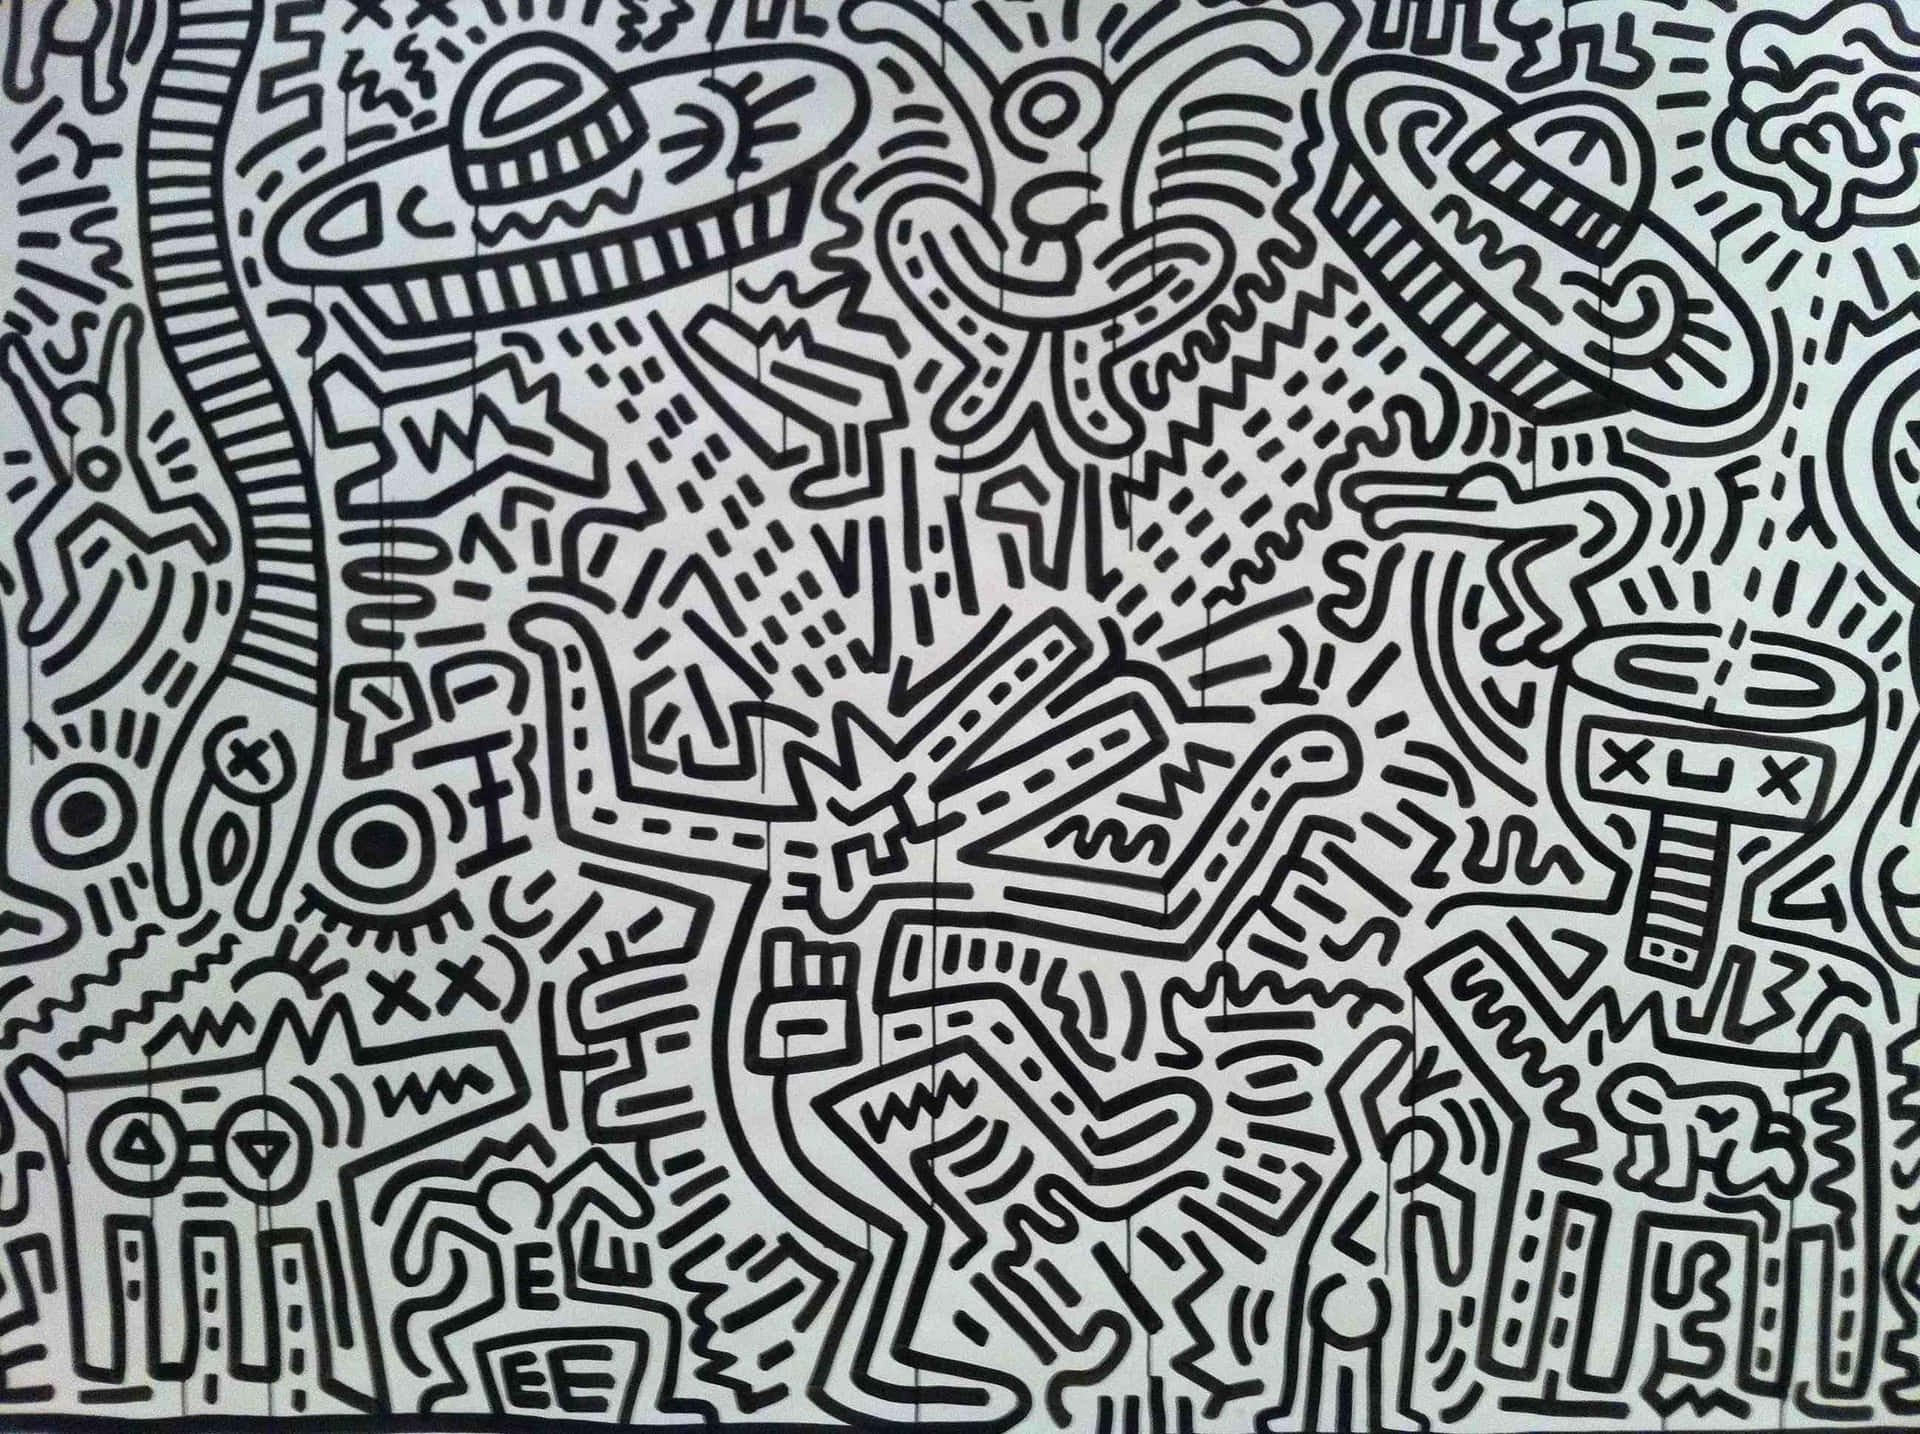 Keith Haring Inspired Abstract Art Wallpaper